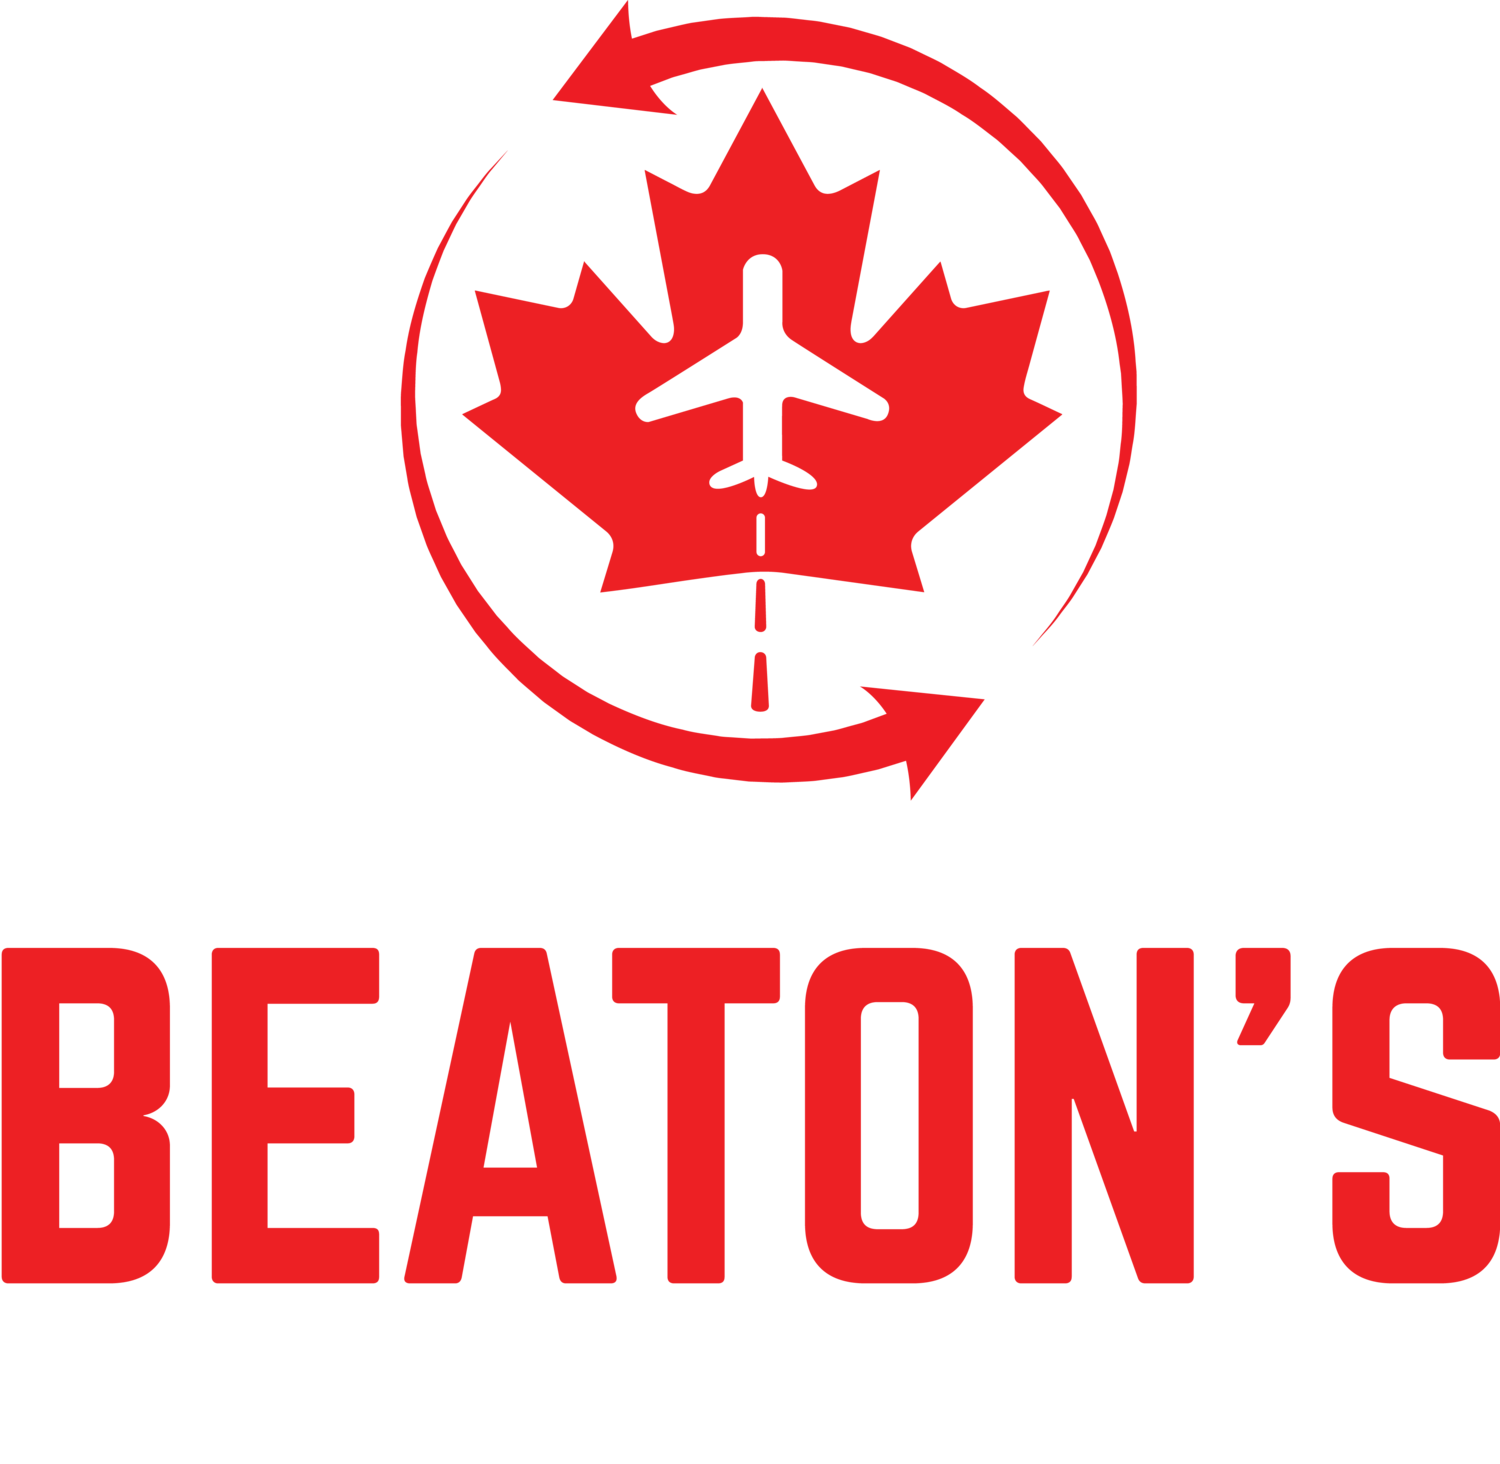 Beaton's Meet and Greet